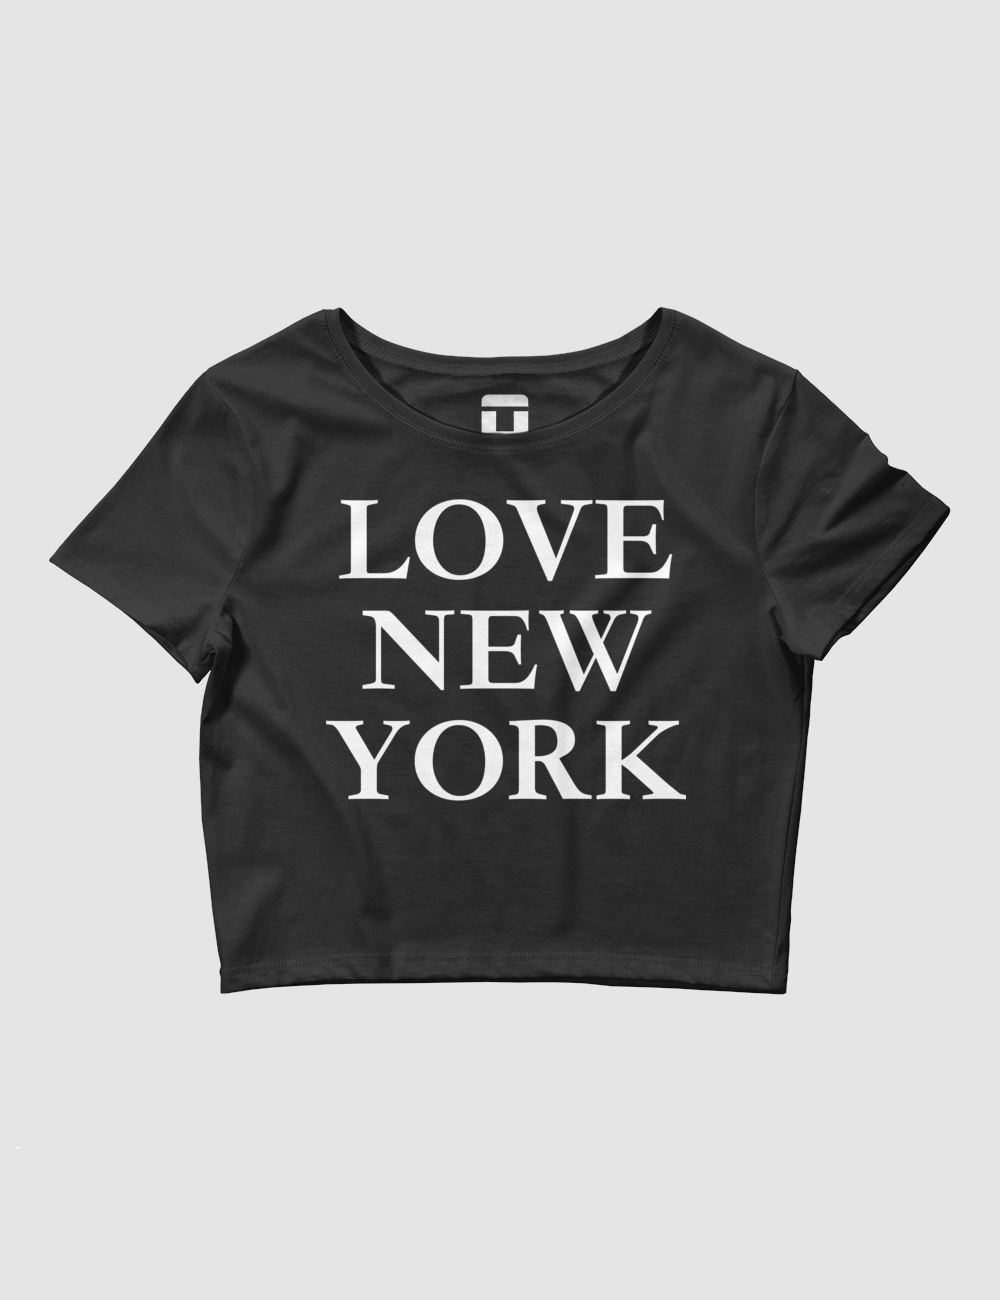 Love New York | Women's Fitted Crop Top T-Shirt OniTakai